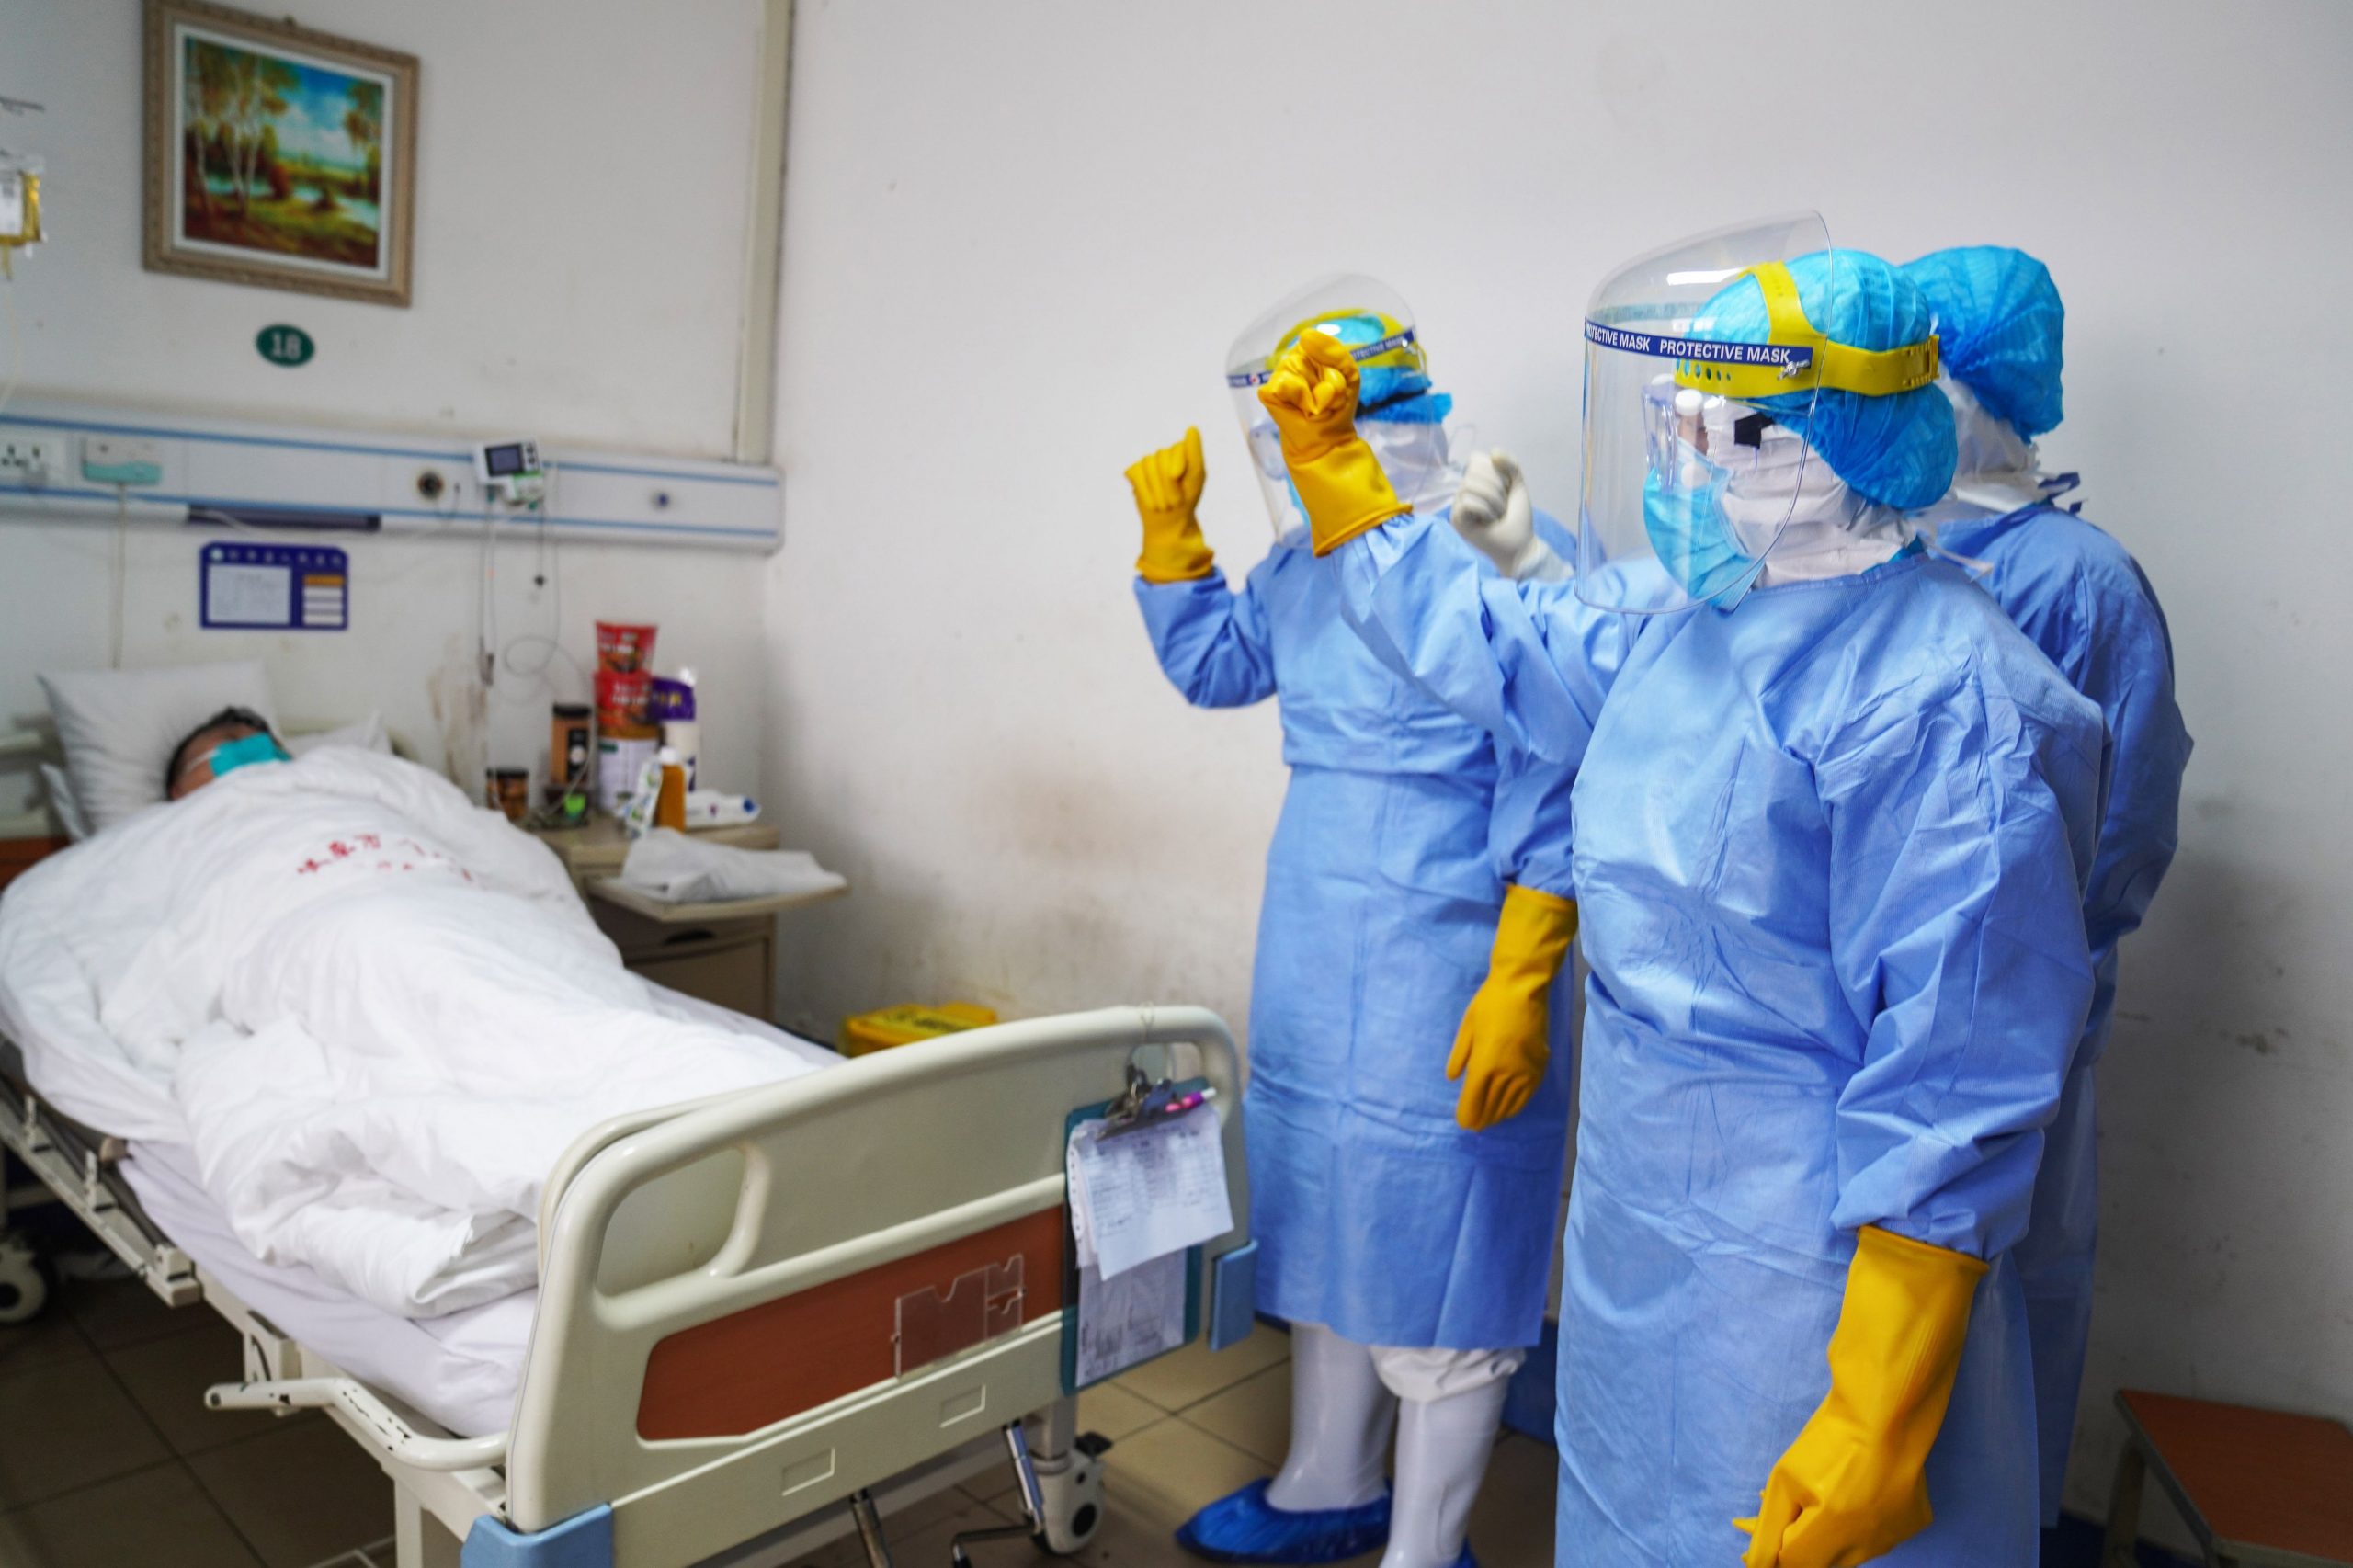 Medidas extremas | Autoridades chinas incineraran a fallecidos por virus de Wuhan